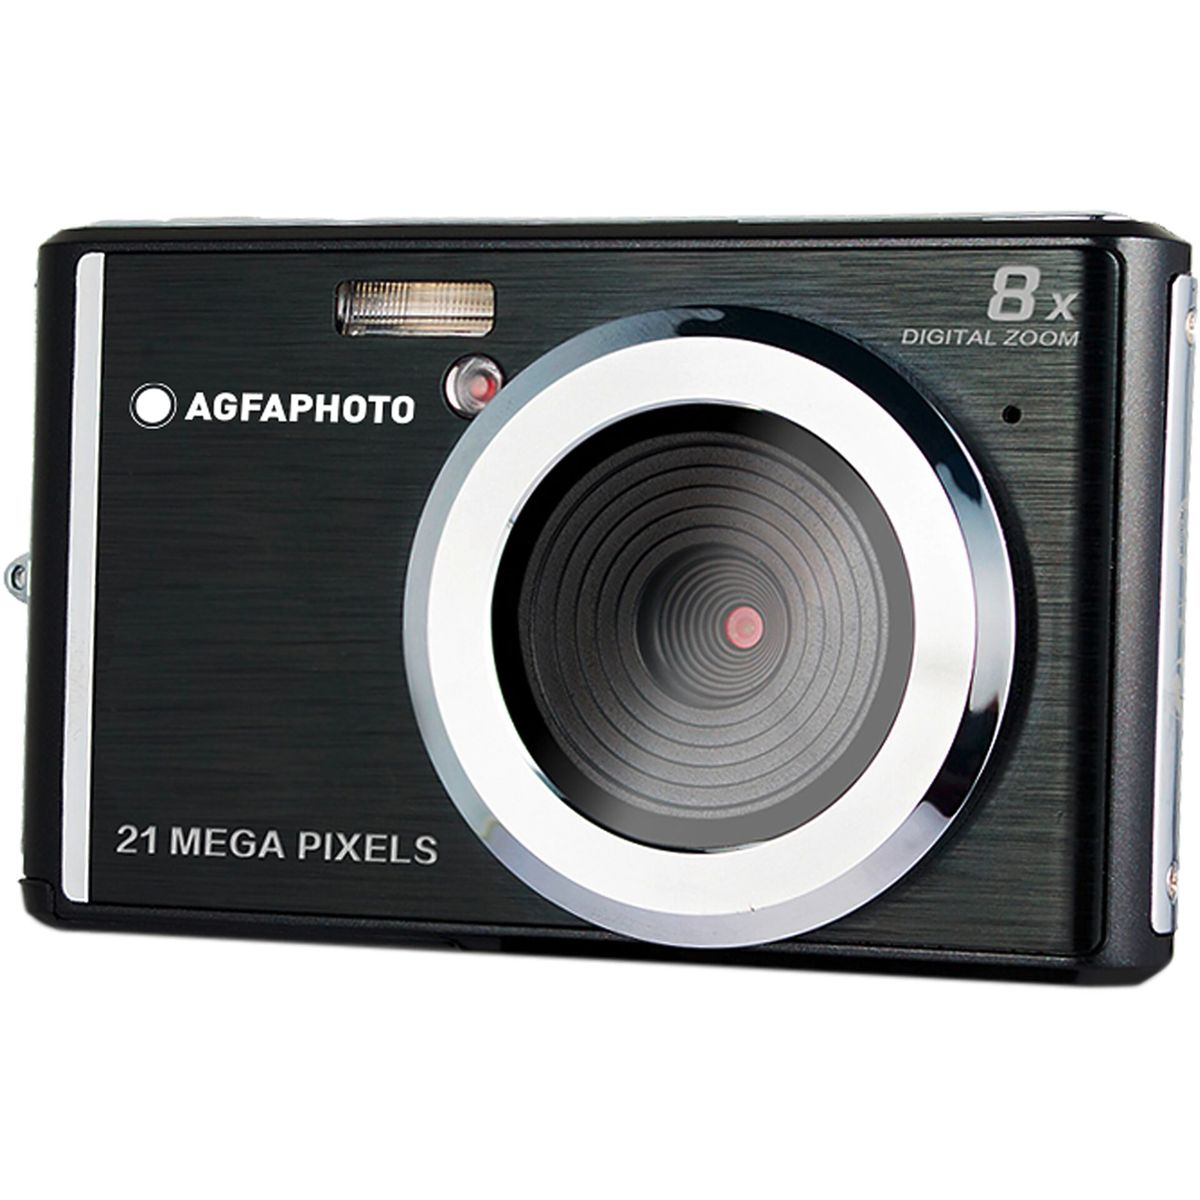 AGFAPHOTO Compact opt. x Zoom, Display- Cam TFT Digitalkamera schwarz, LCL 8 DC5200